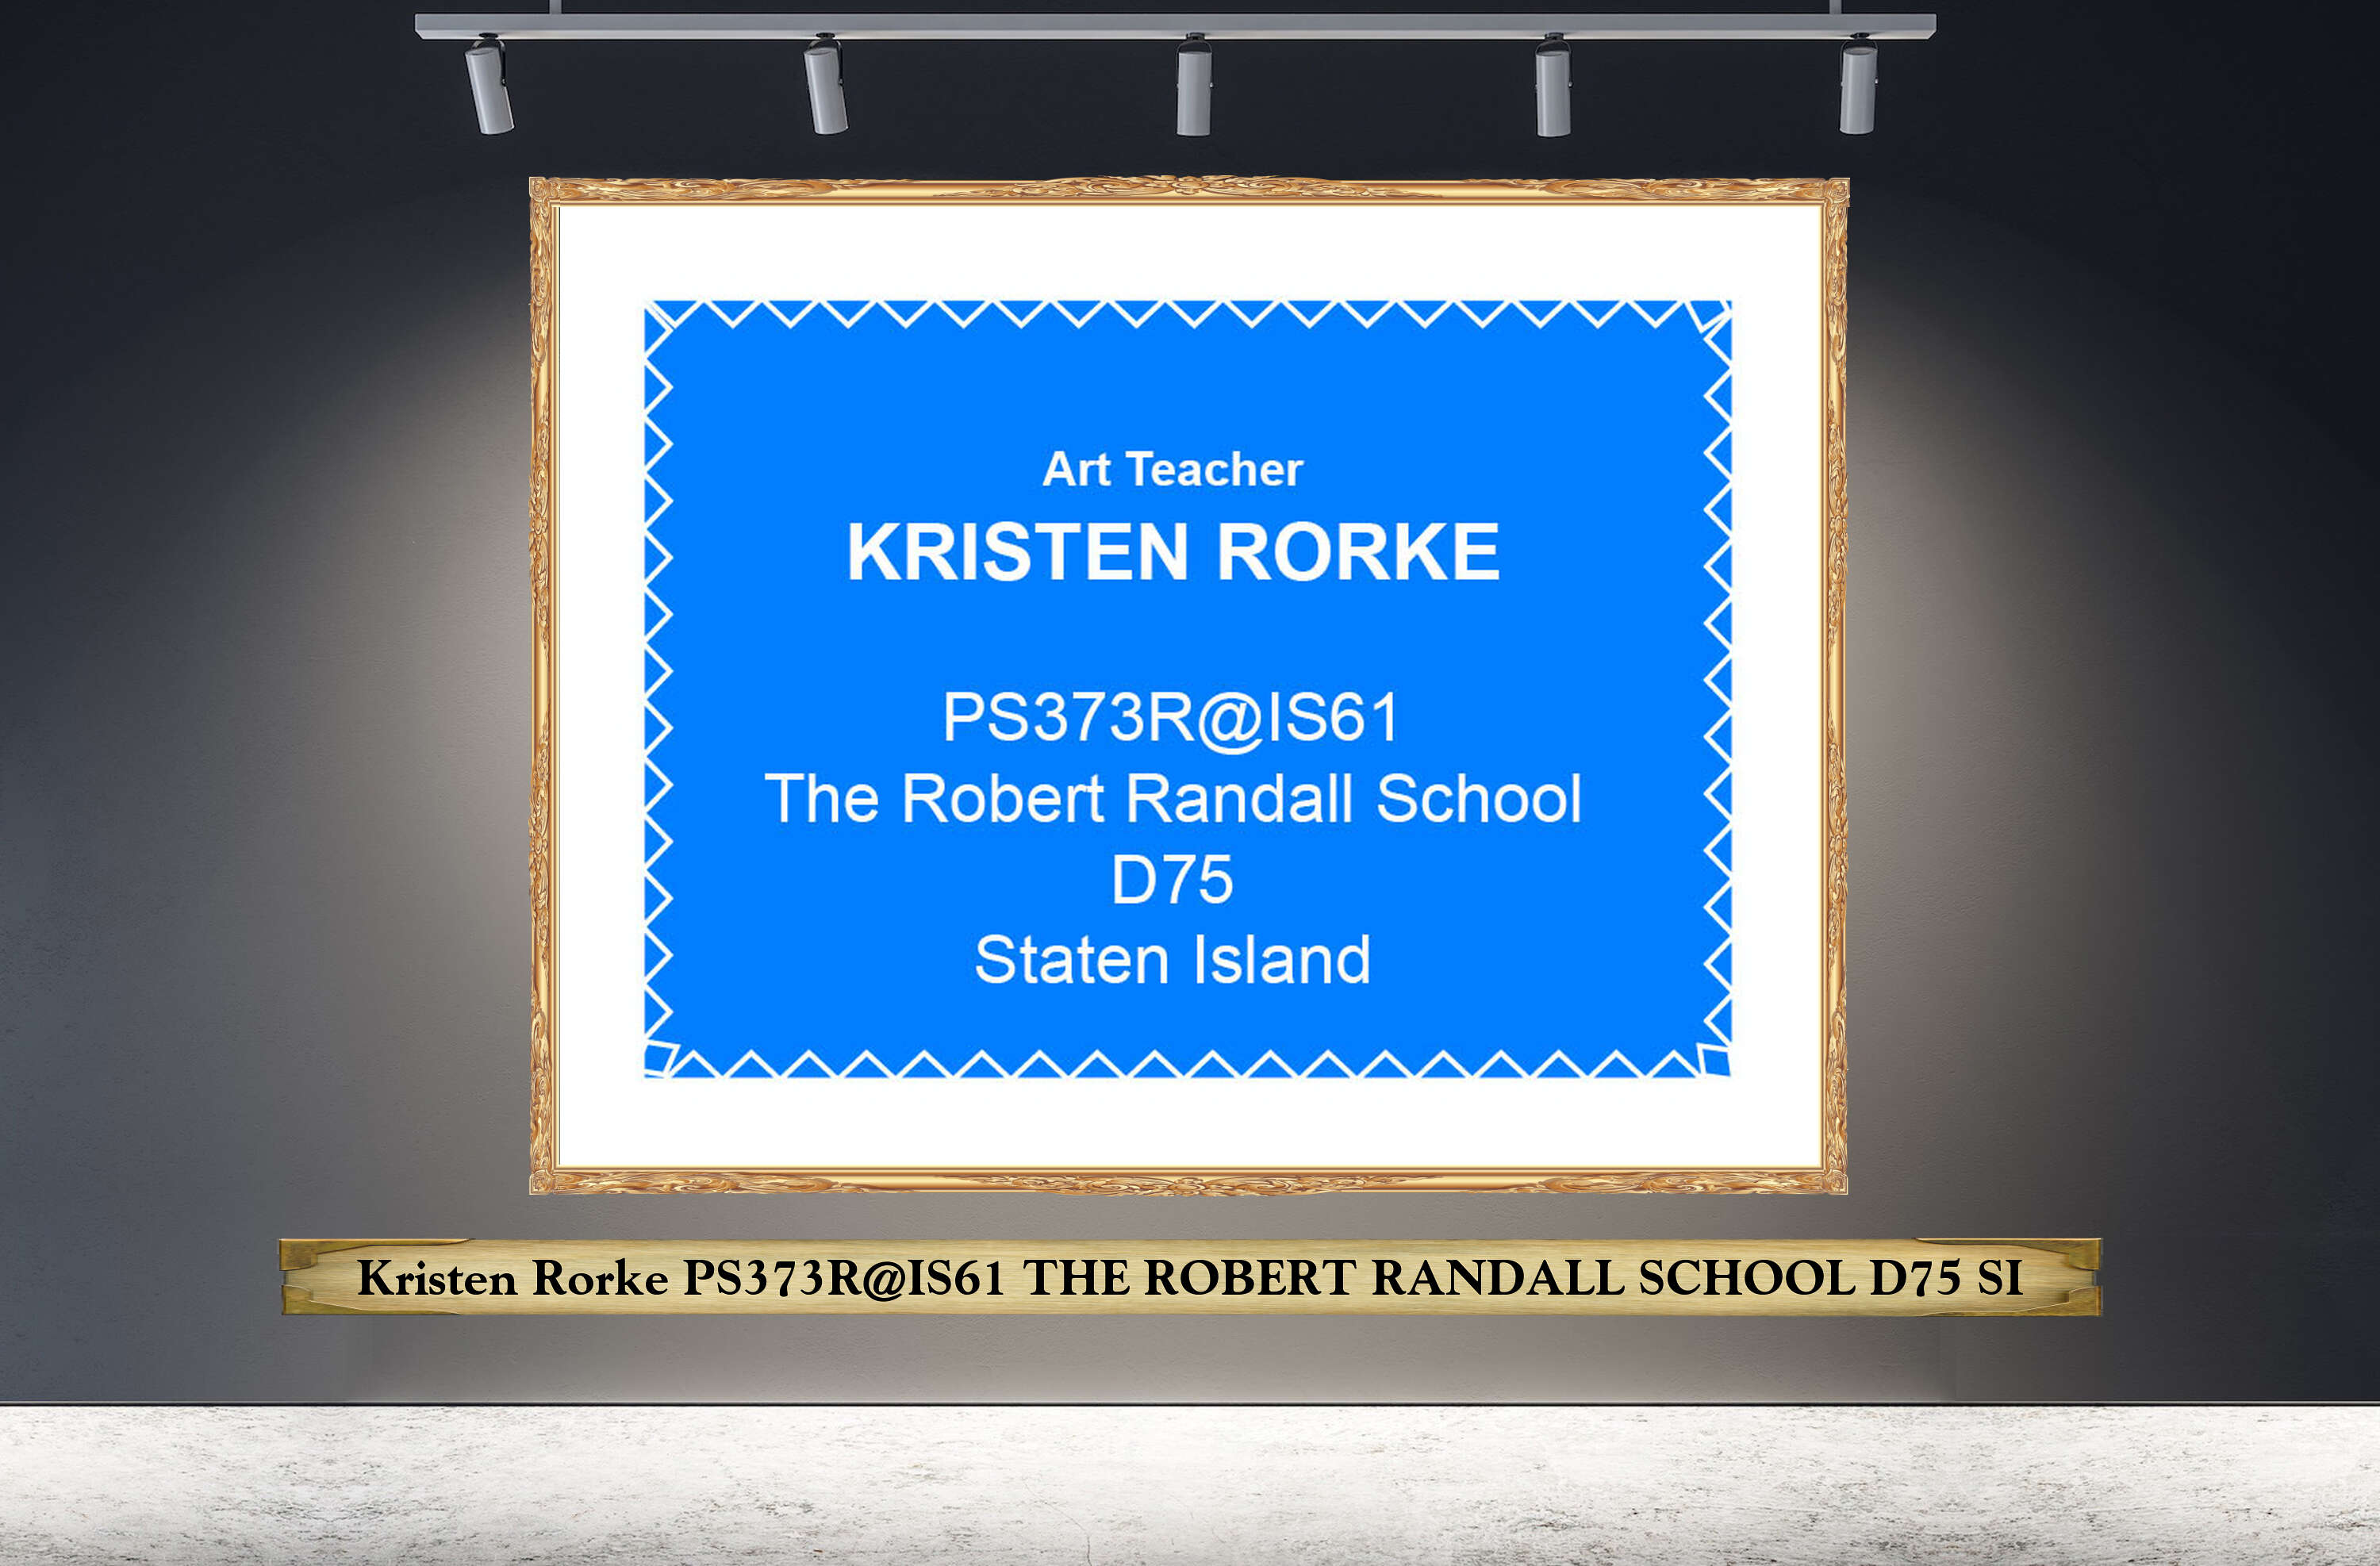 Kristen Rorke PS373R@IS61 THE ROBERT RANDALL SCHOOL D75 SI